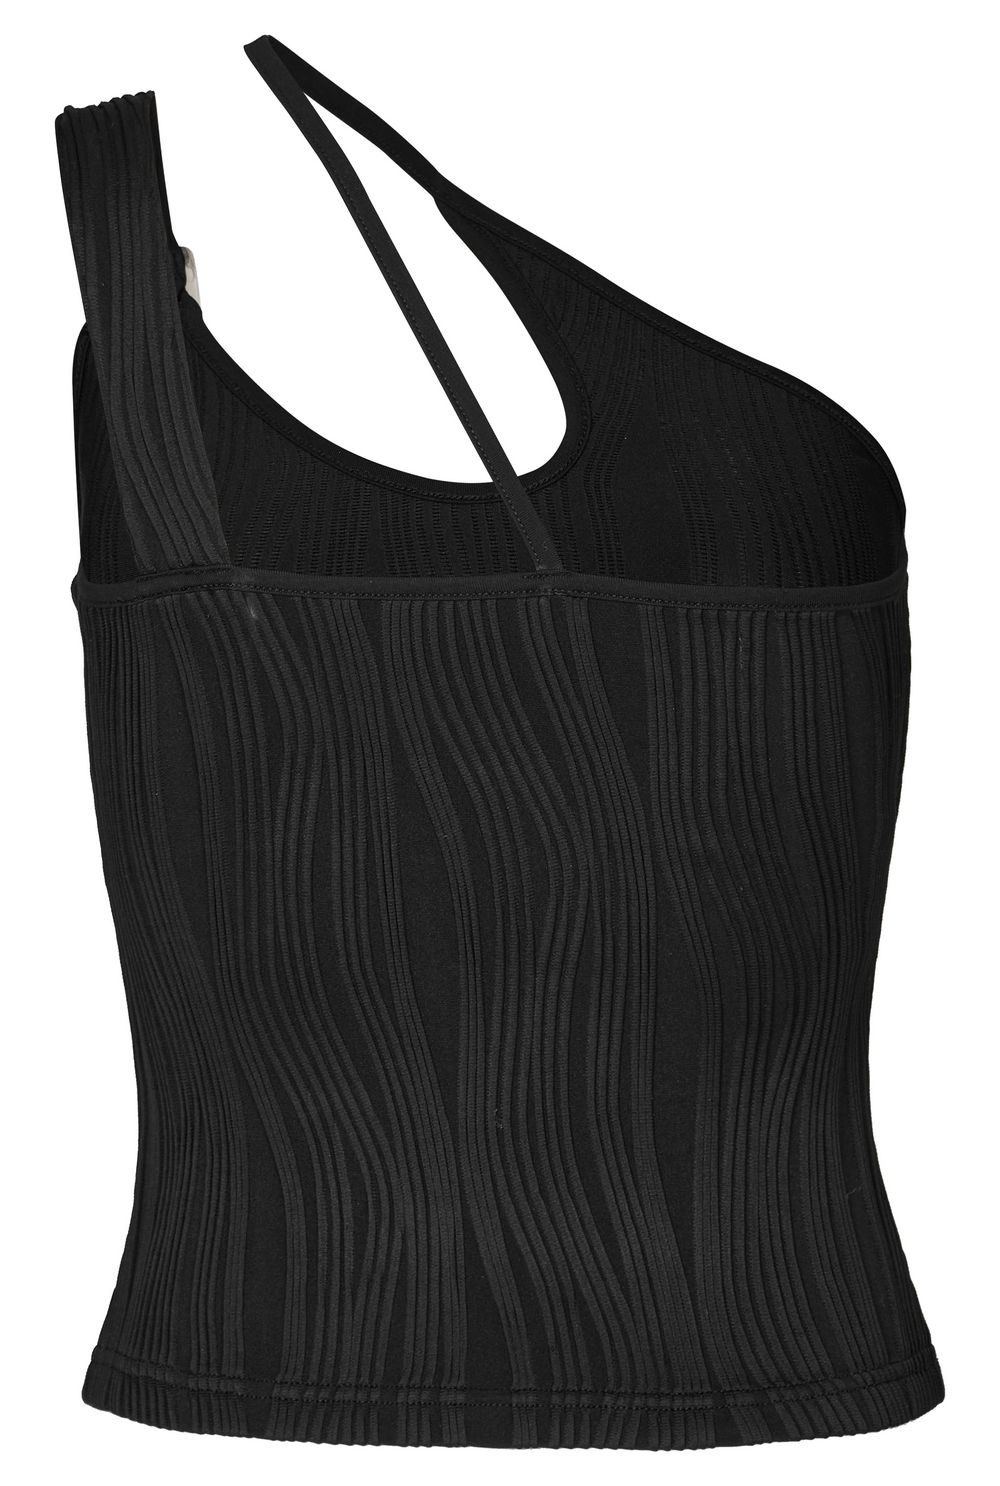 Women Stylish Black One-Shoulder Buckle Tank Top